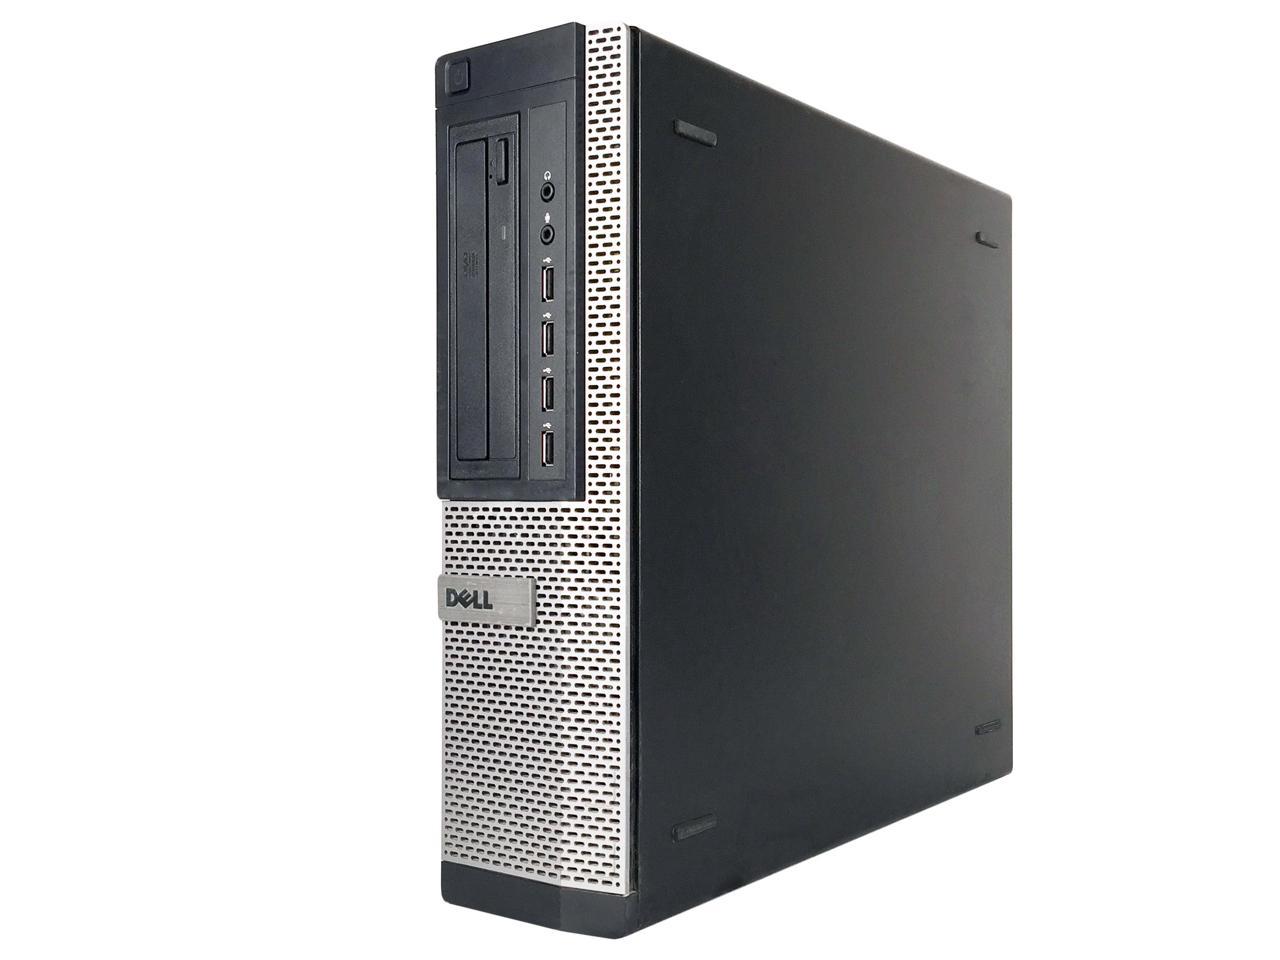 Refurbished Dell Grade A OptiPlex 990 Desktop Computer, Intel Core I5-2500 (3.3 GHz), 8G DDR3, 500G HDD, DVD, Windows 10 Home 64-bit (English/Spanish), 1 Year Warranty